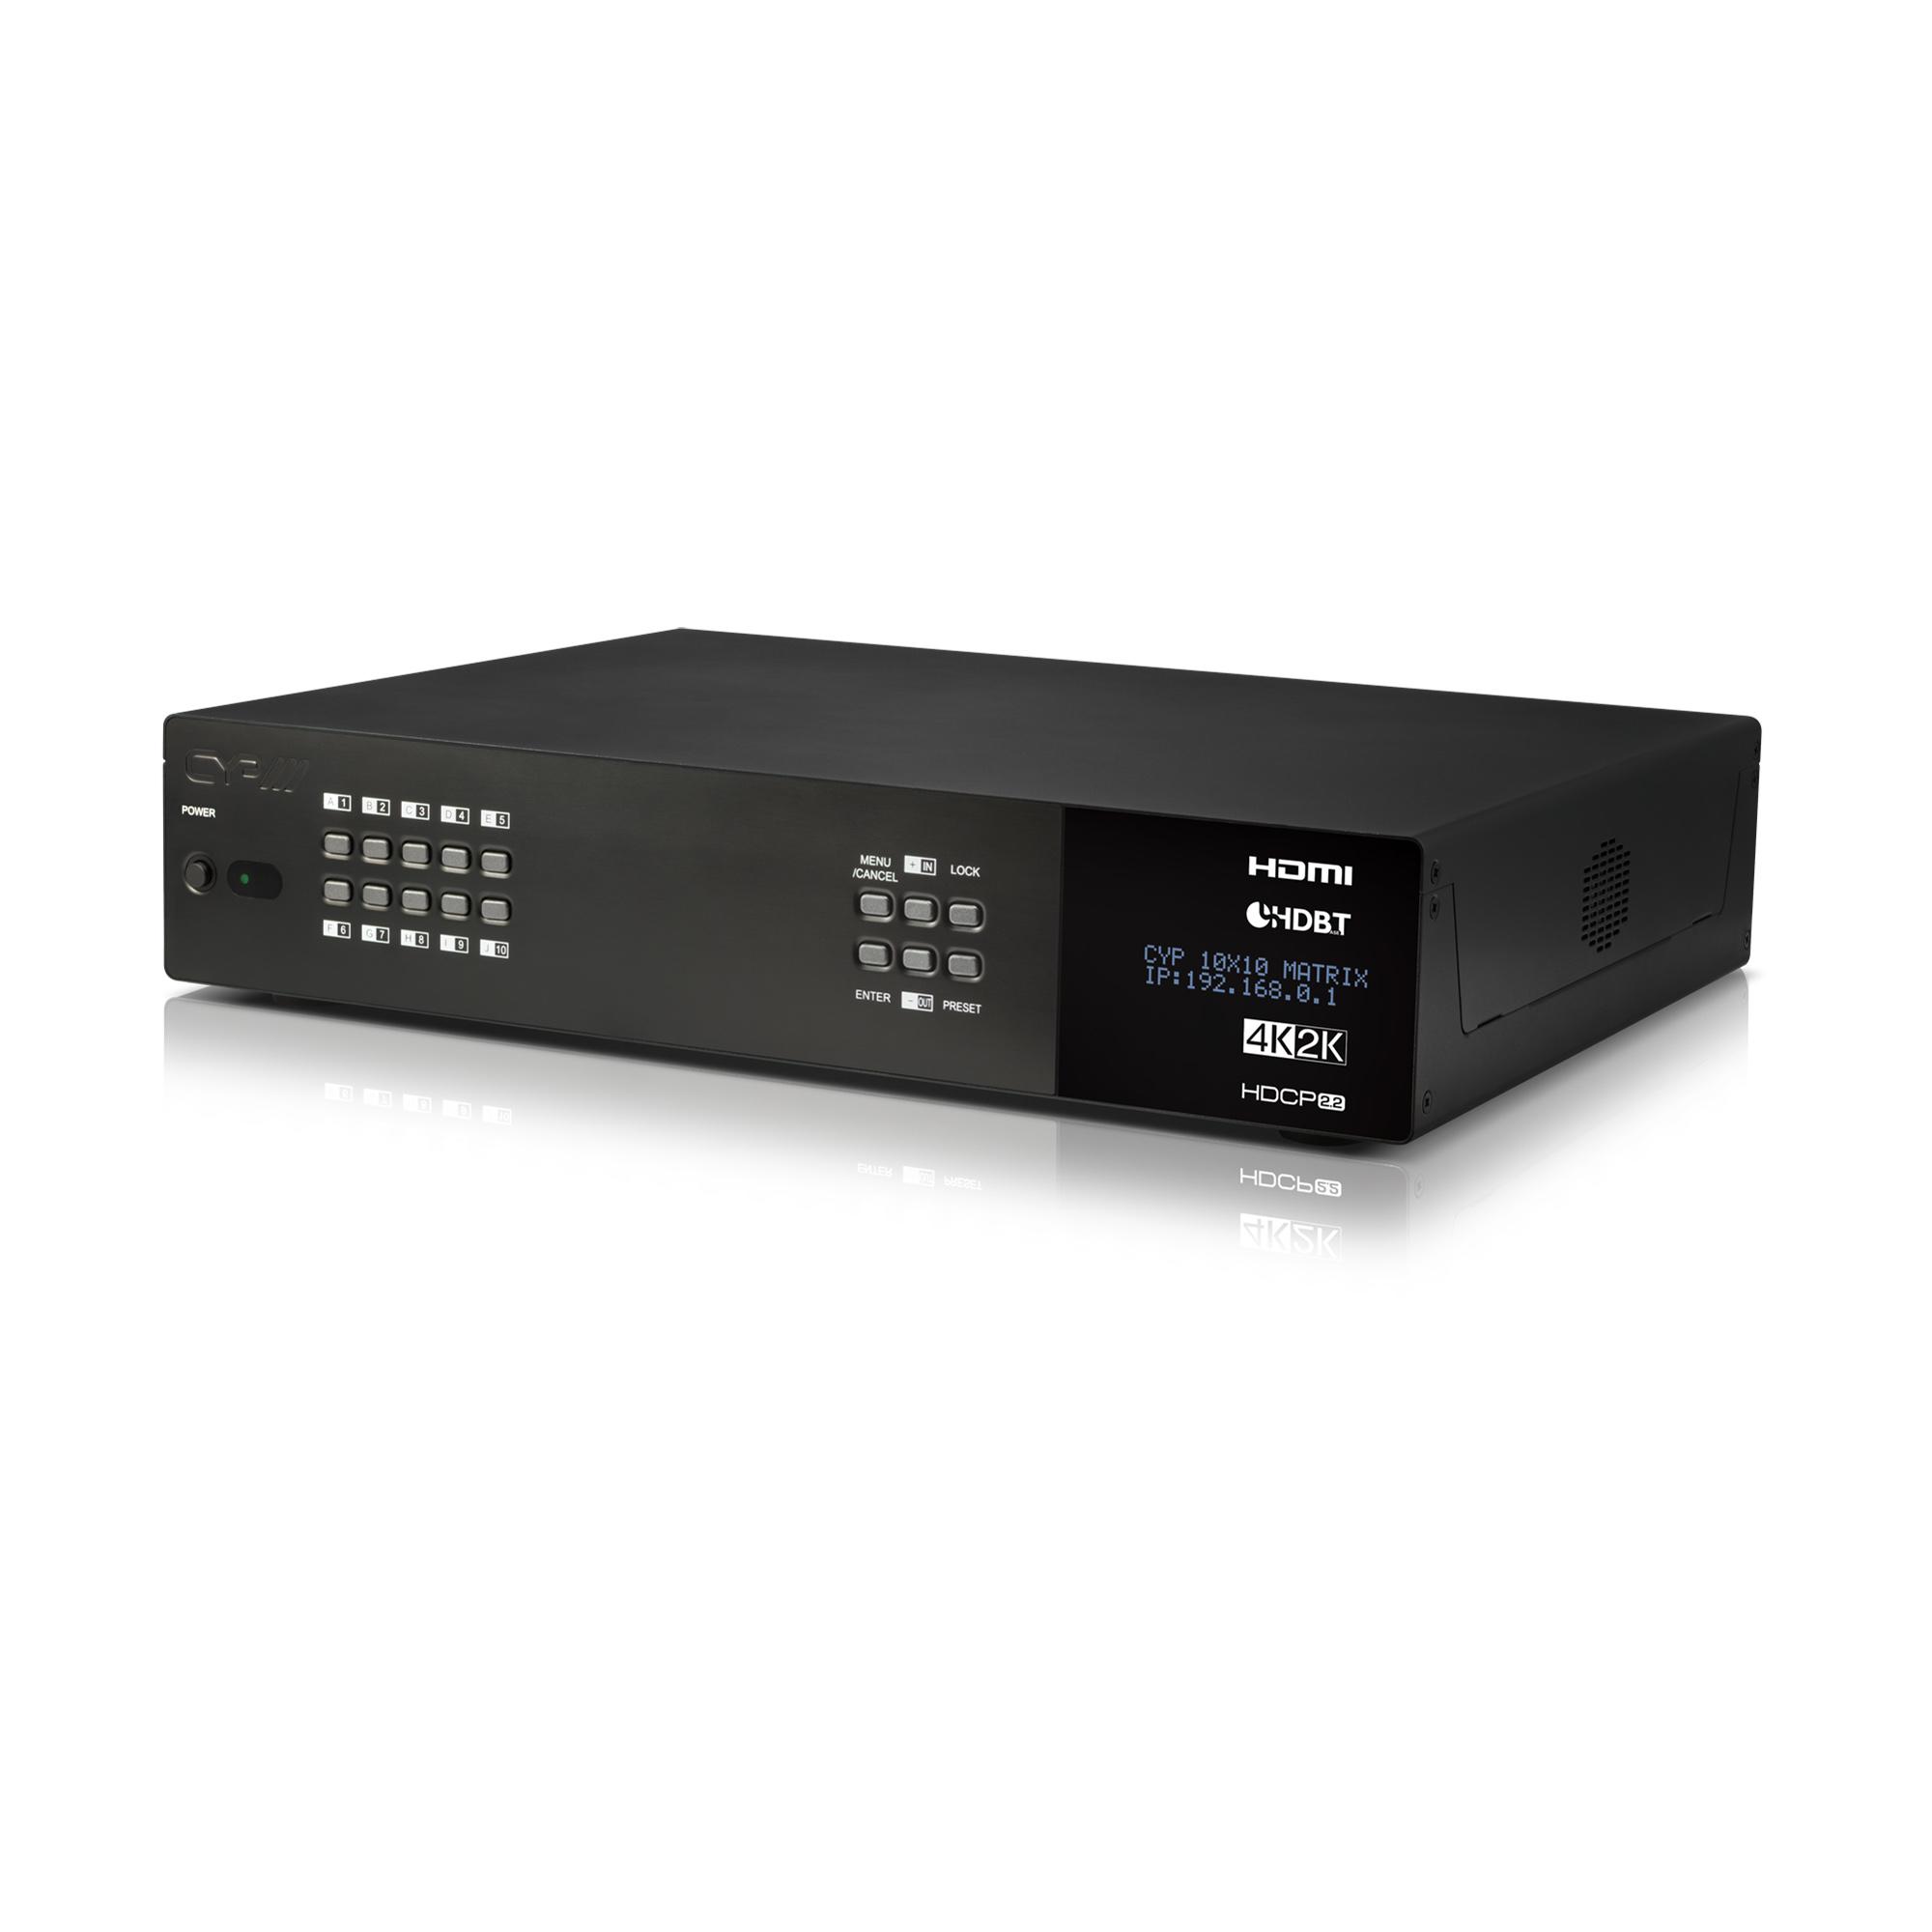 PUV-1082-4K22N 10 x 10 HDMI HDBaseT™ Matrix with Audio Matricing (4K, HDCP2.2, HDMI2.0, PoH, LAN, OAR, 100m)